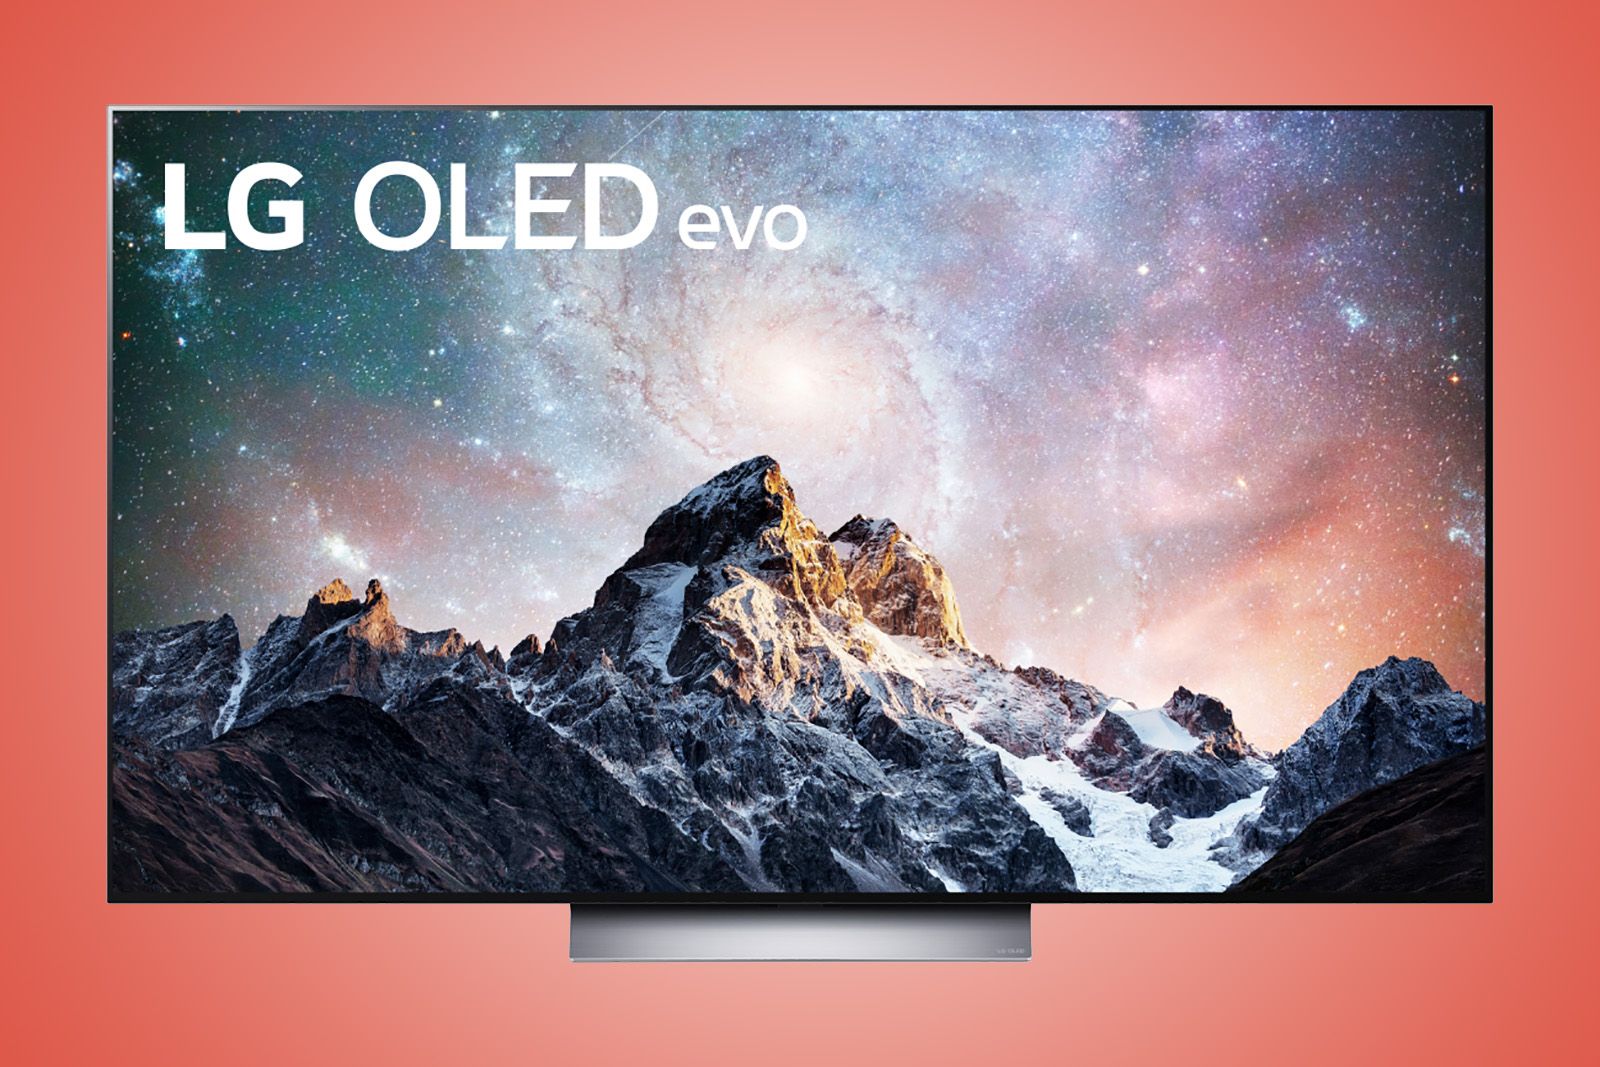 LG C2 OLED TV range includes 